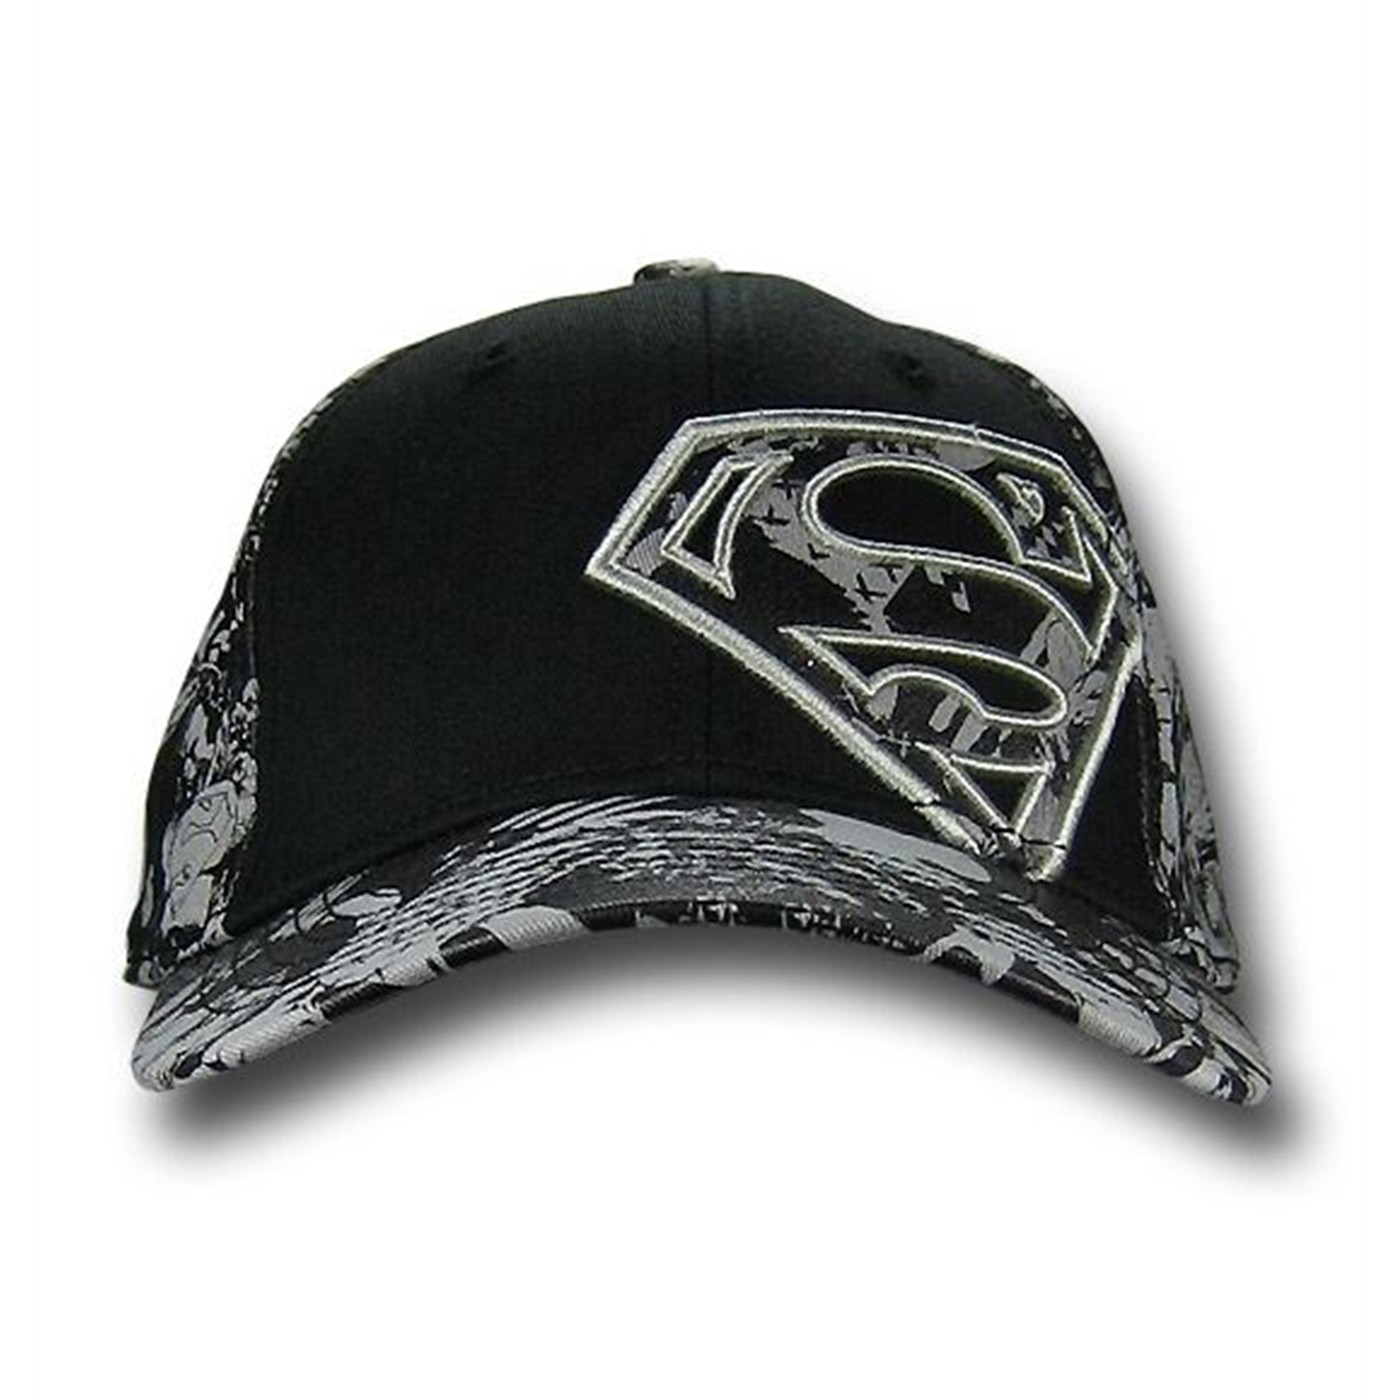 Superman Off Center Symbol and Image Baseball Cap